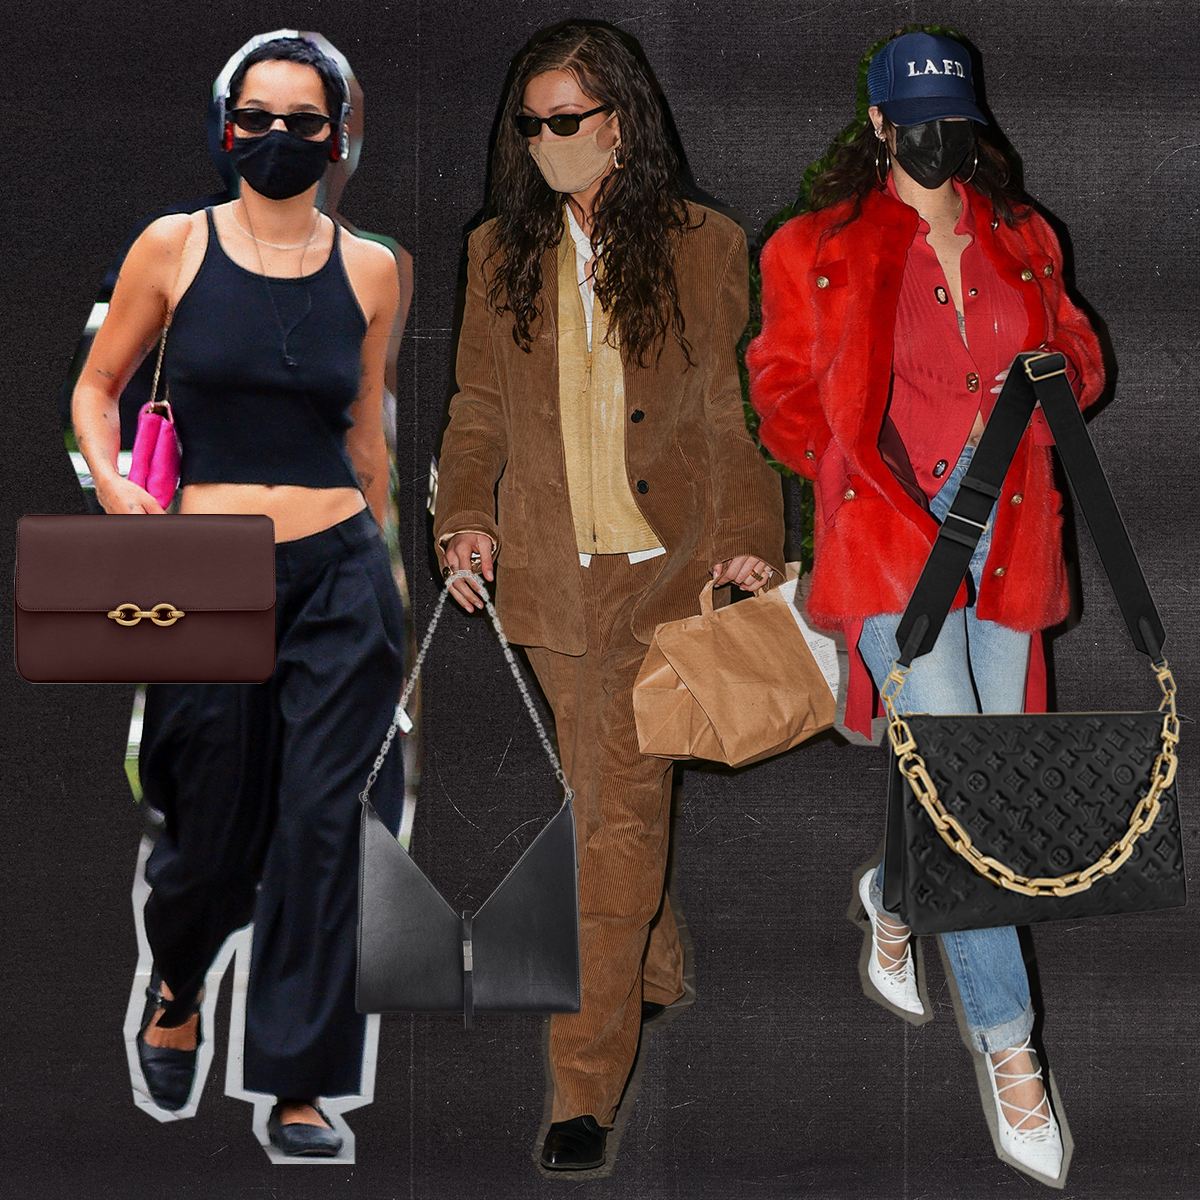 Do You Want A Louis Vuitton Handbag as a Gift? - The Fashion Tag Blog